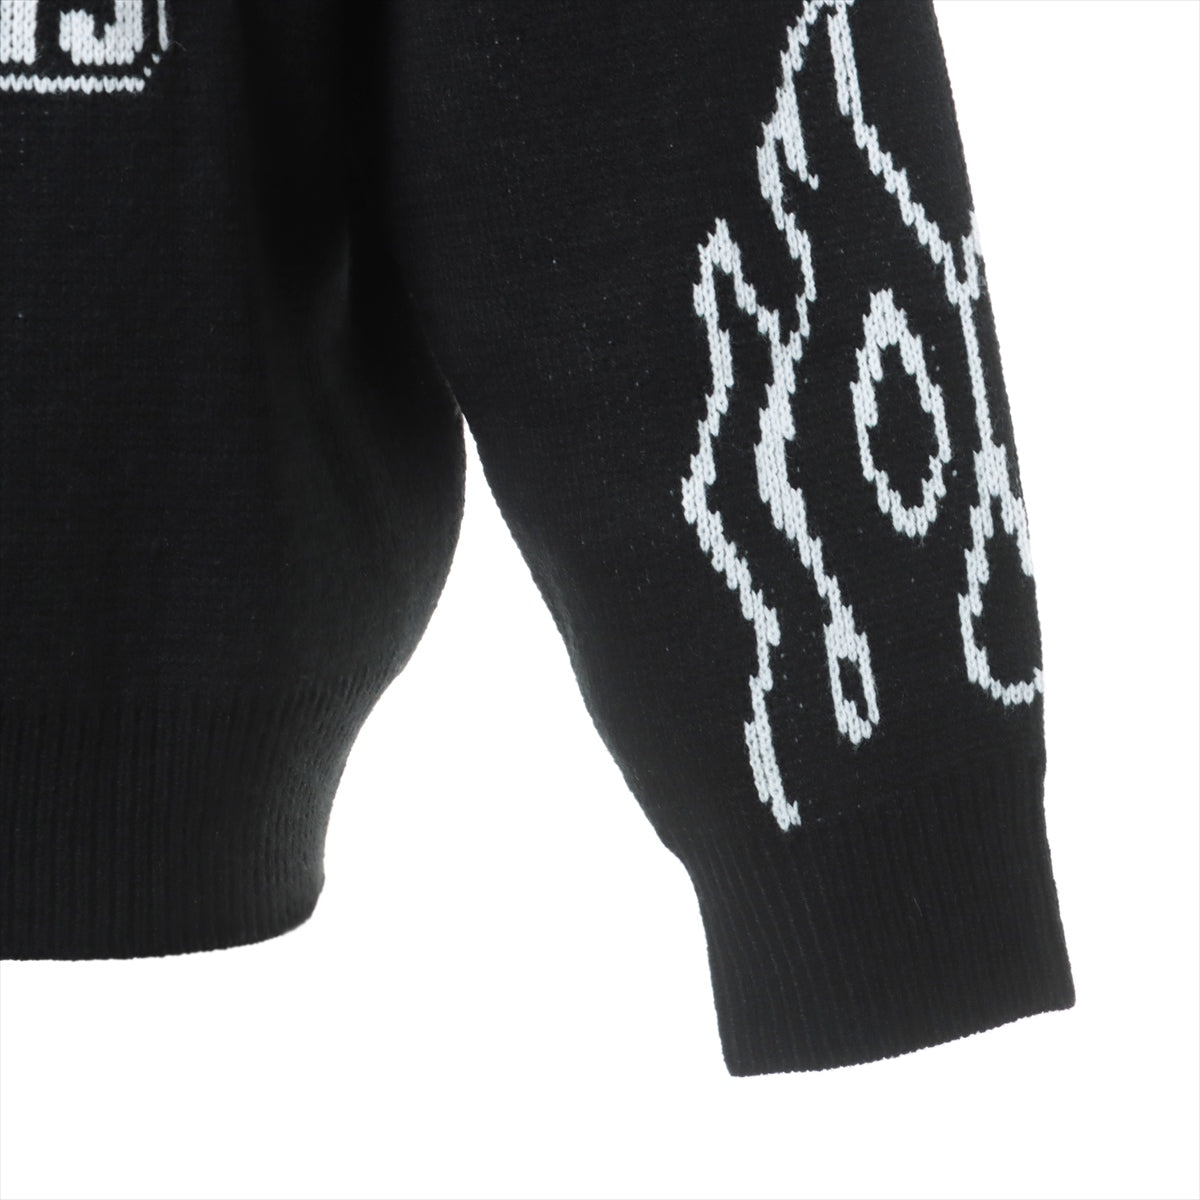 Supreme x Vanson 22SS Acrylic Knit M Men's Black  Leathers Sweater